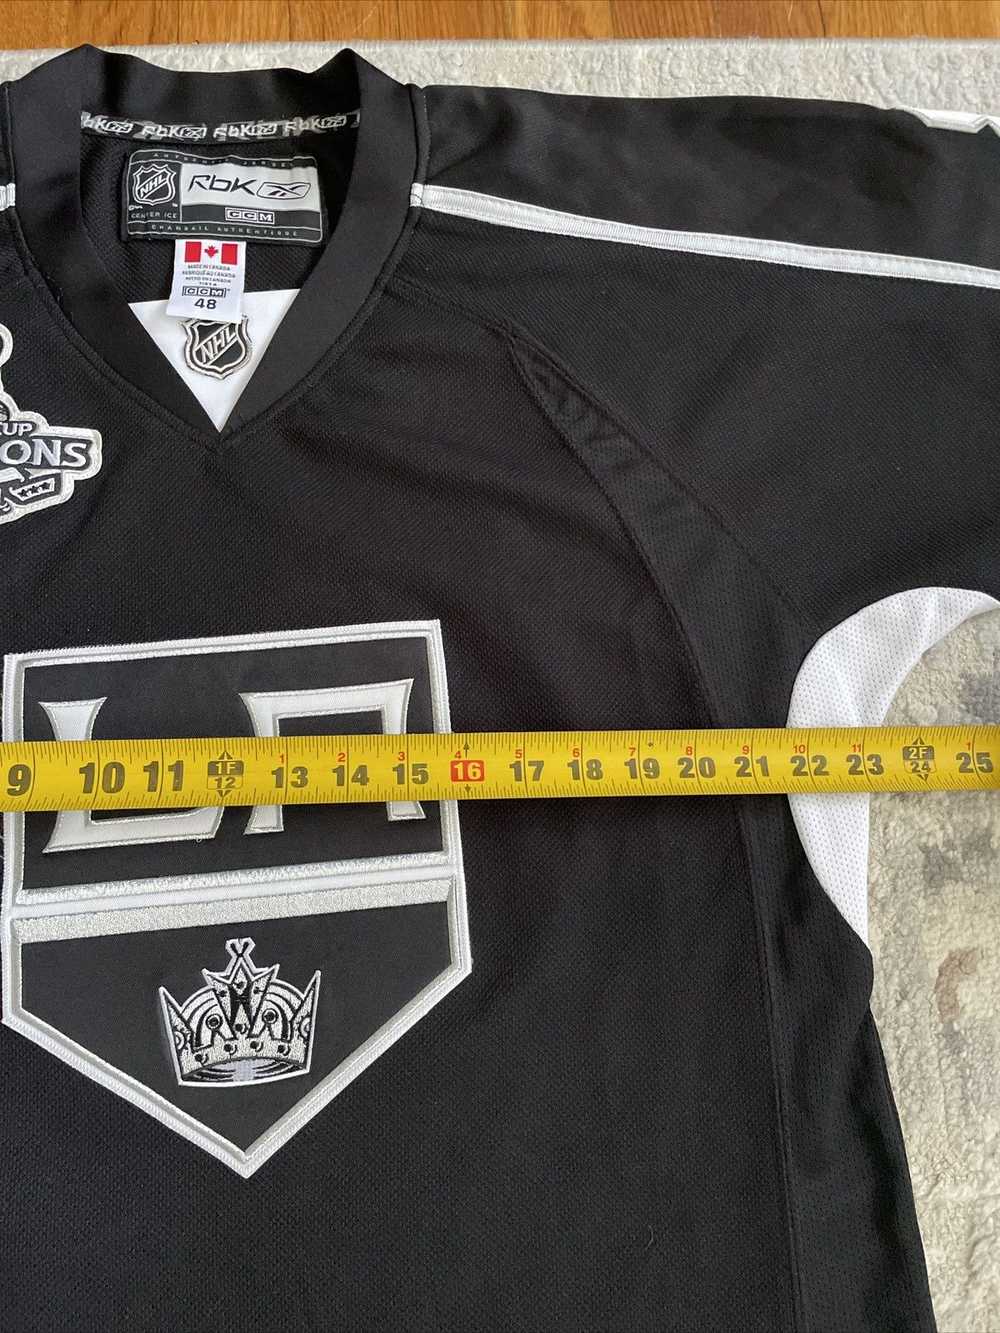 Reebok Hockey jersey - image 5